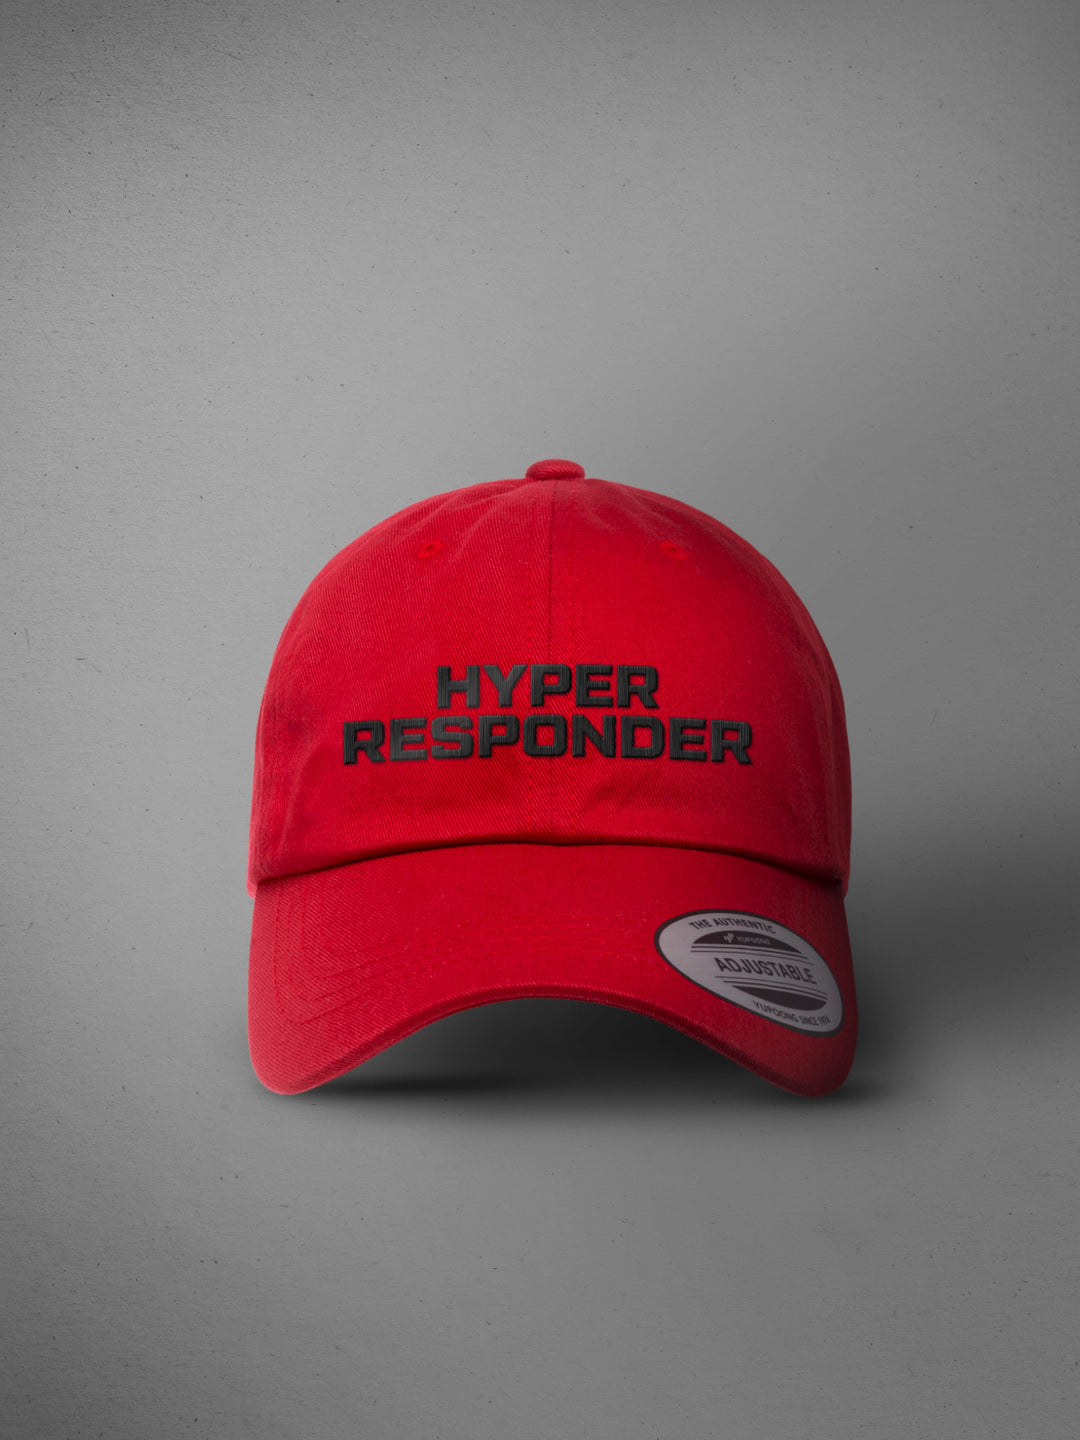 Hyper Responder Dat Hat for gym